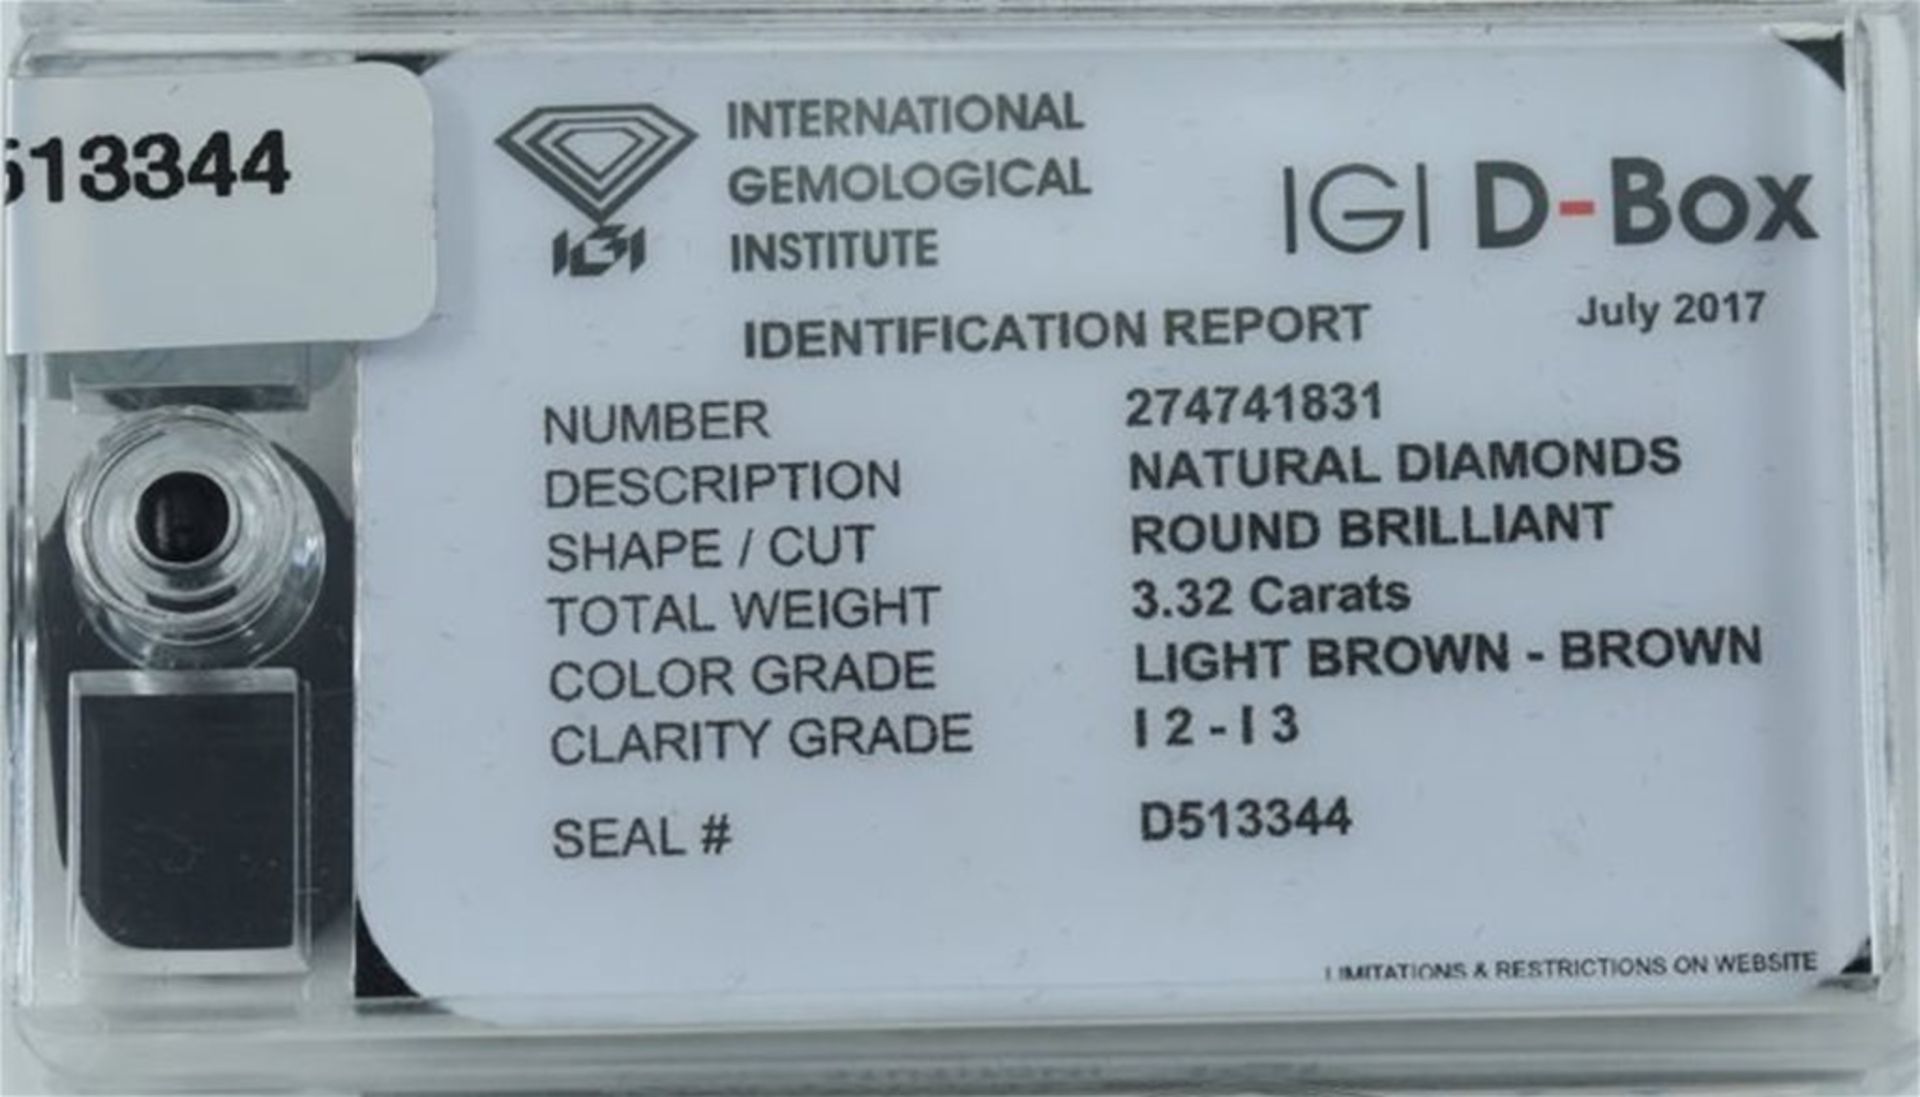 IGI Certified Sealed 3.32 ct. Diamond “D Box” UNTREATED - Image 2 of 4